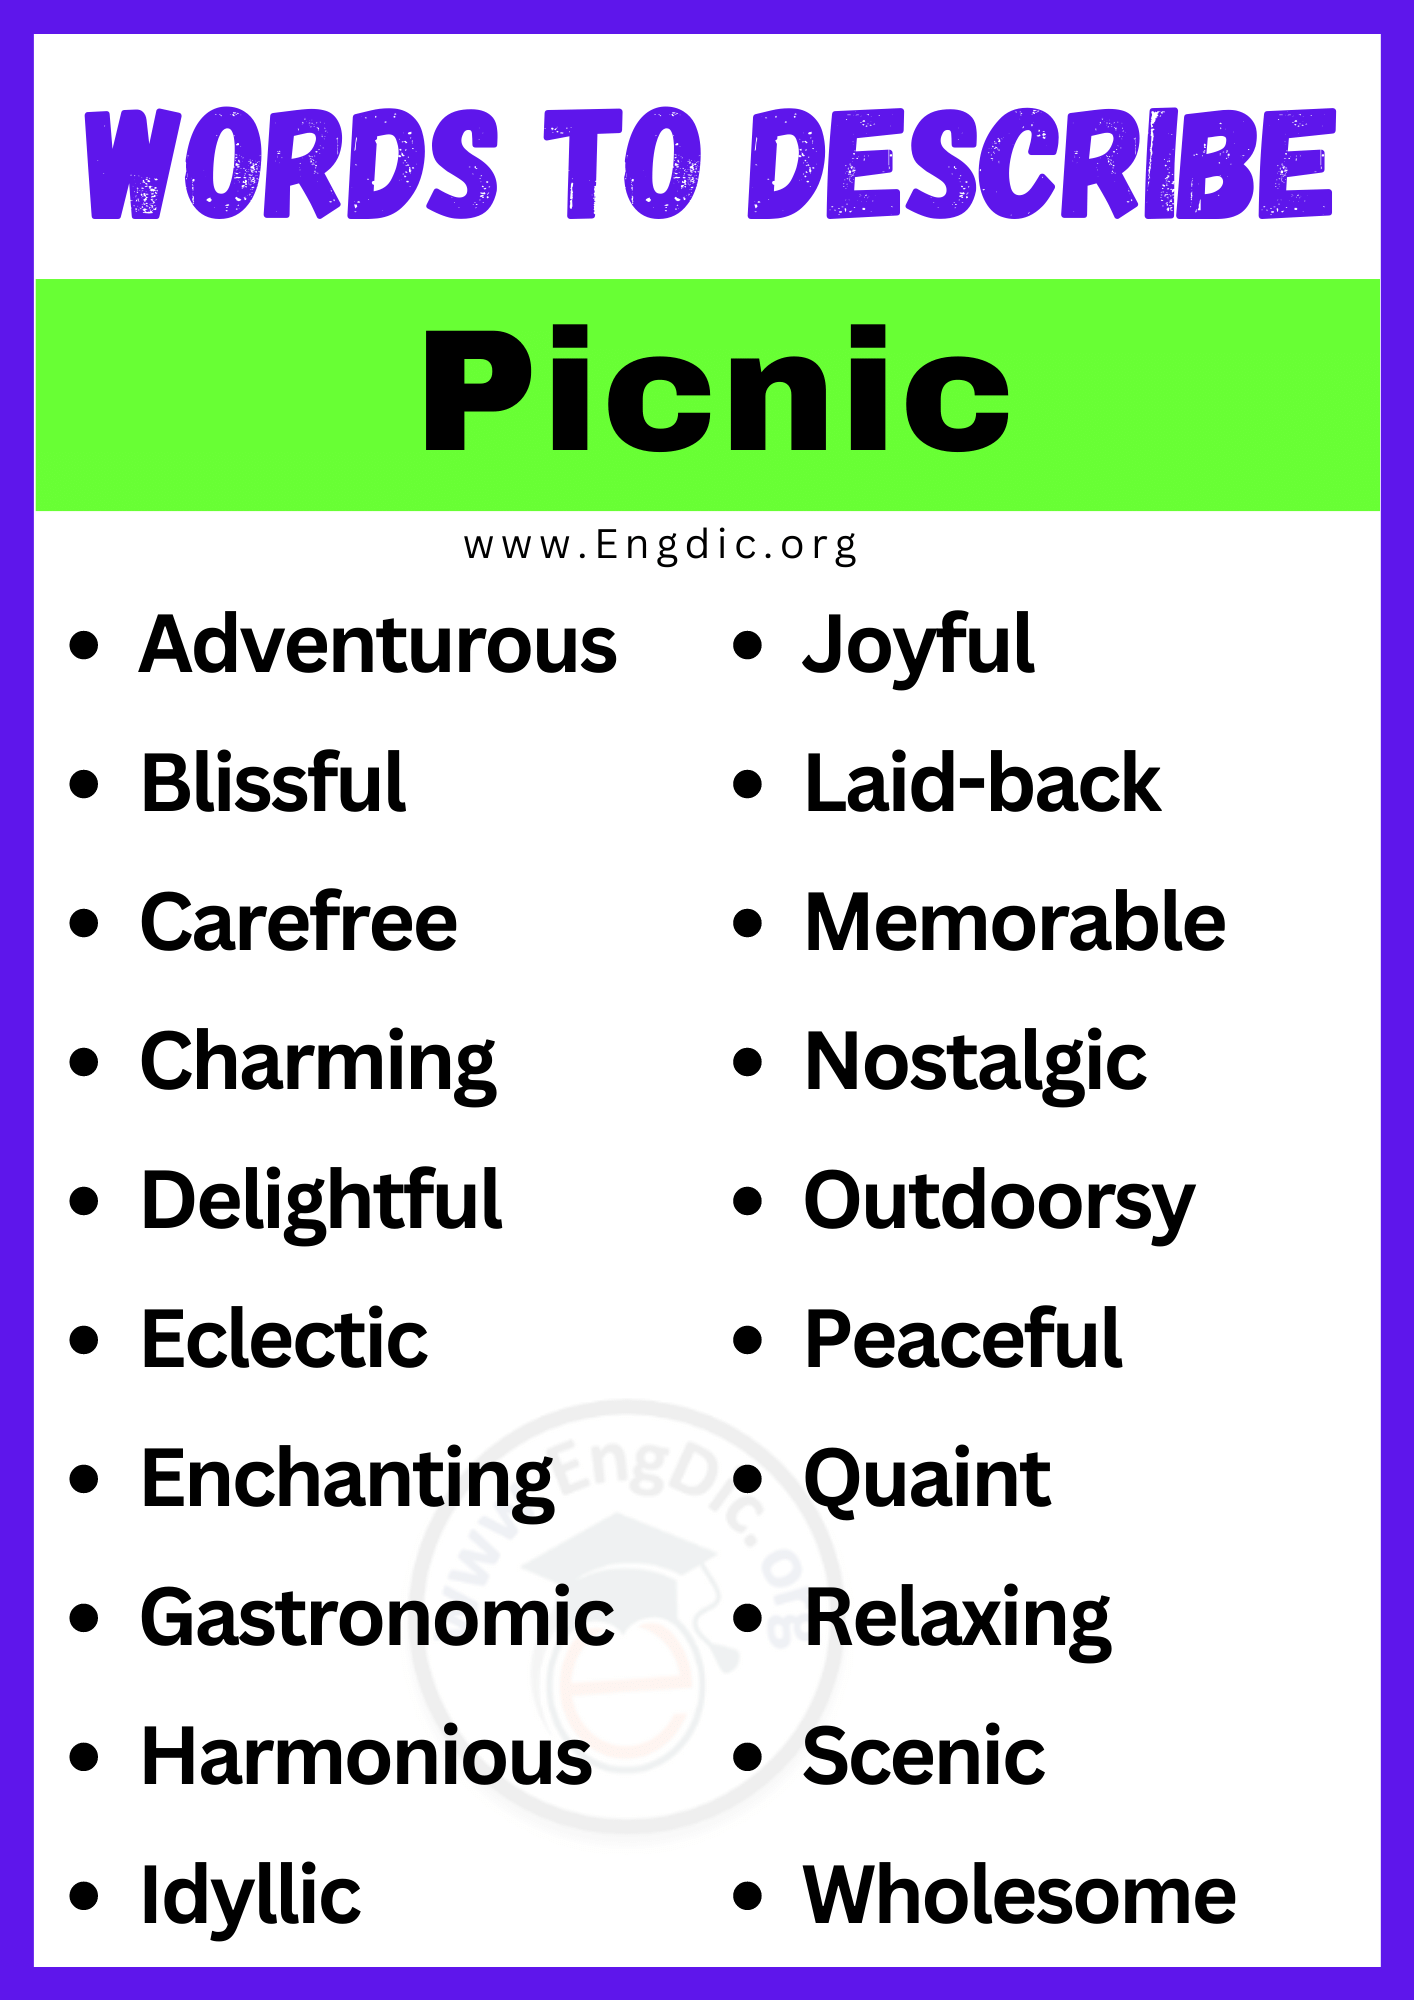 Words to Describe Picnic